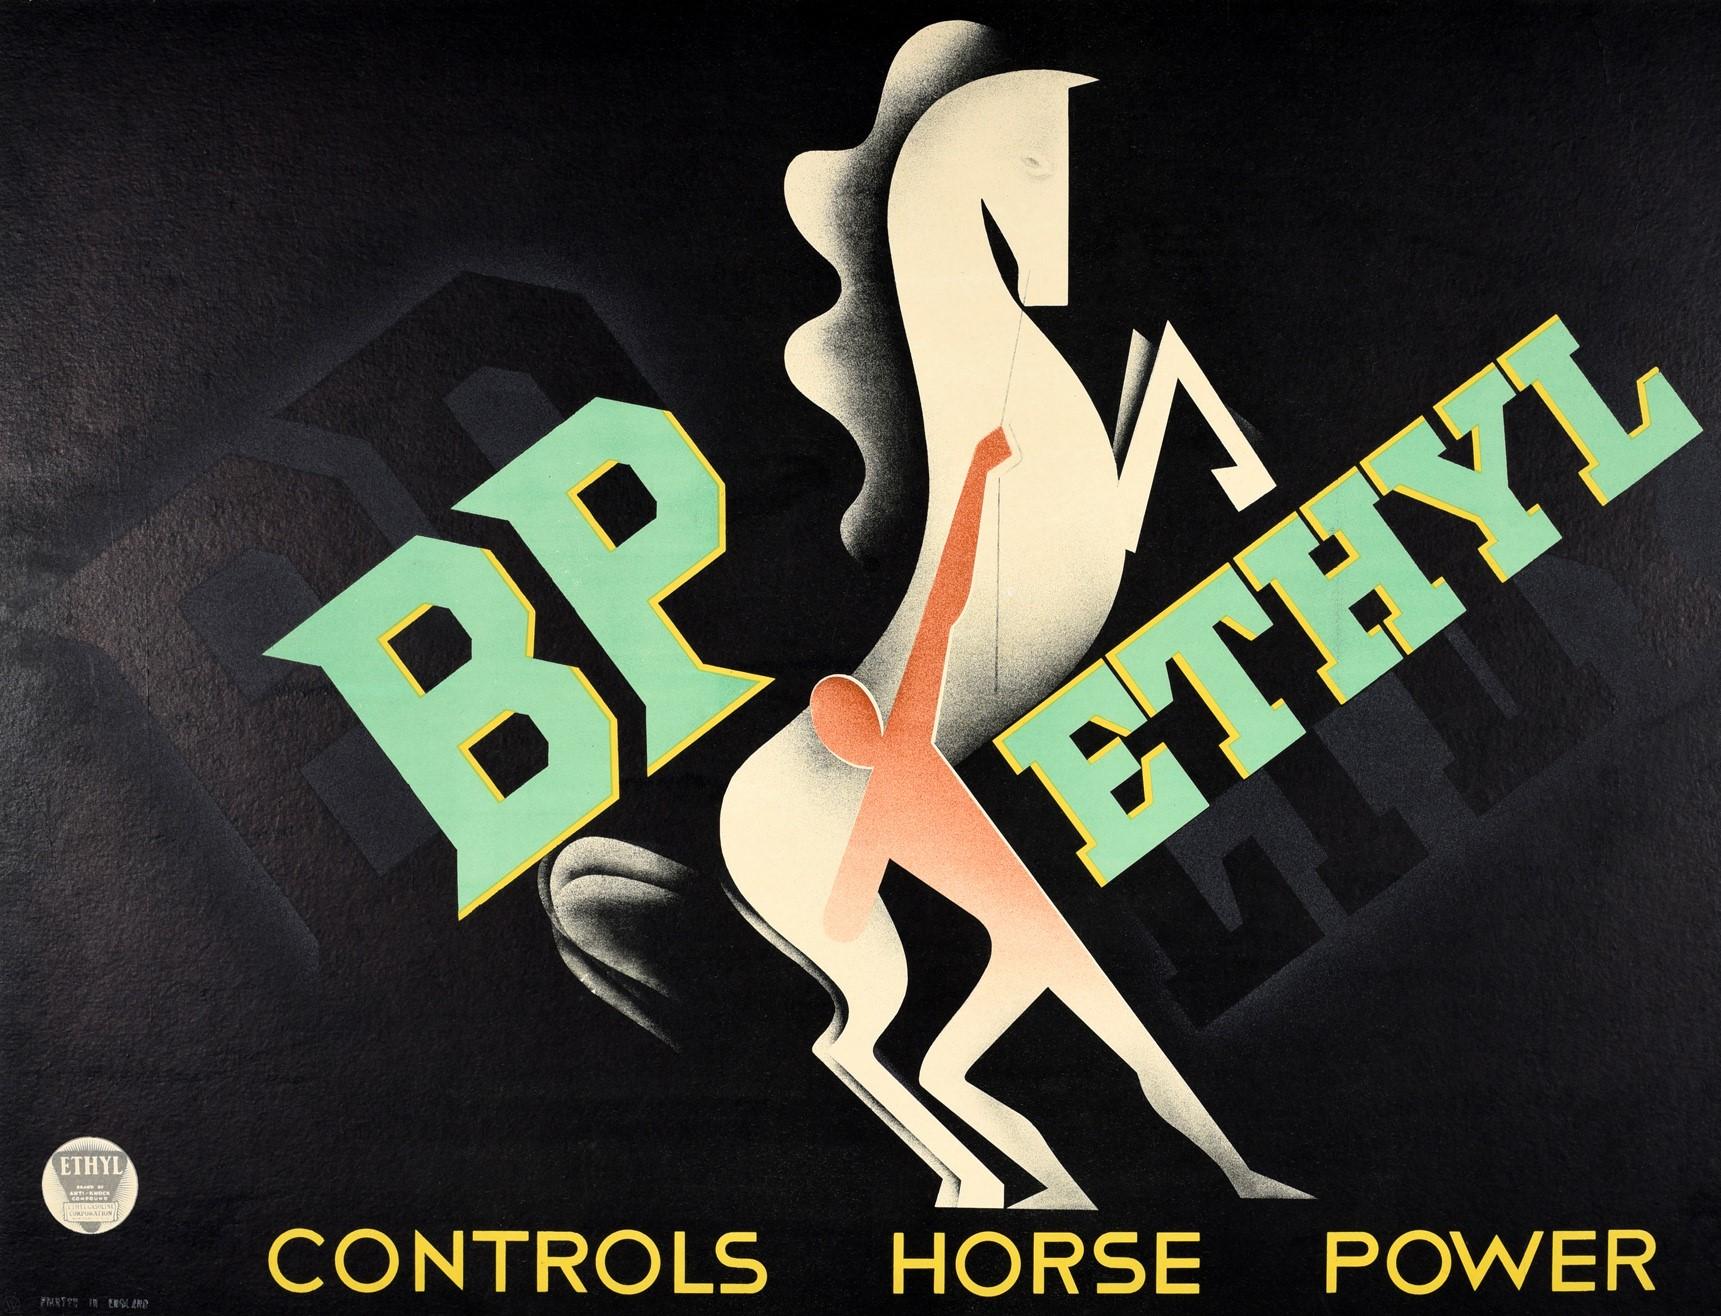 Original Vintage Poster BP Ethyl Controls Horse Power Modernist Art Deco Design - Print by Paolo Garretto